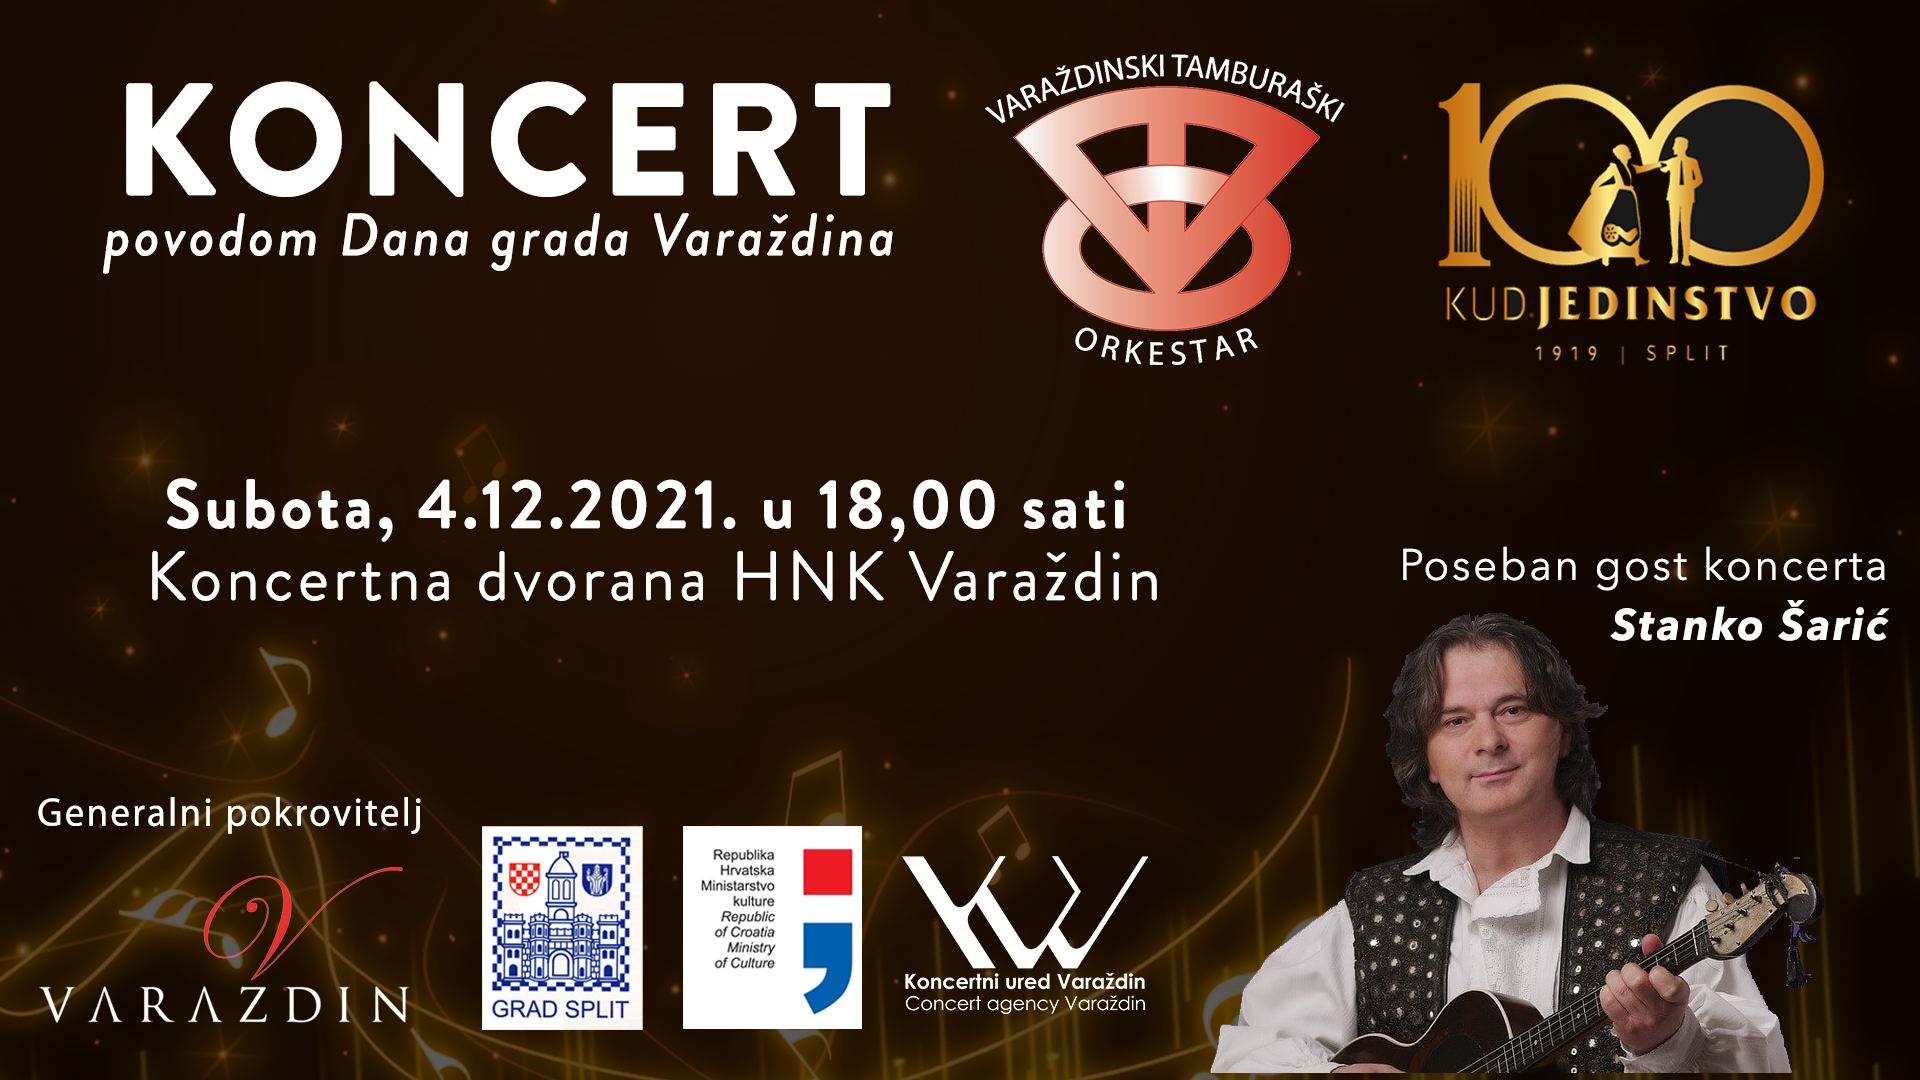 Koncert Varaždinskog tamburaškog orkestra povodom Dana grada Varaždinathumbnail - 